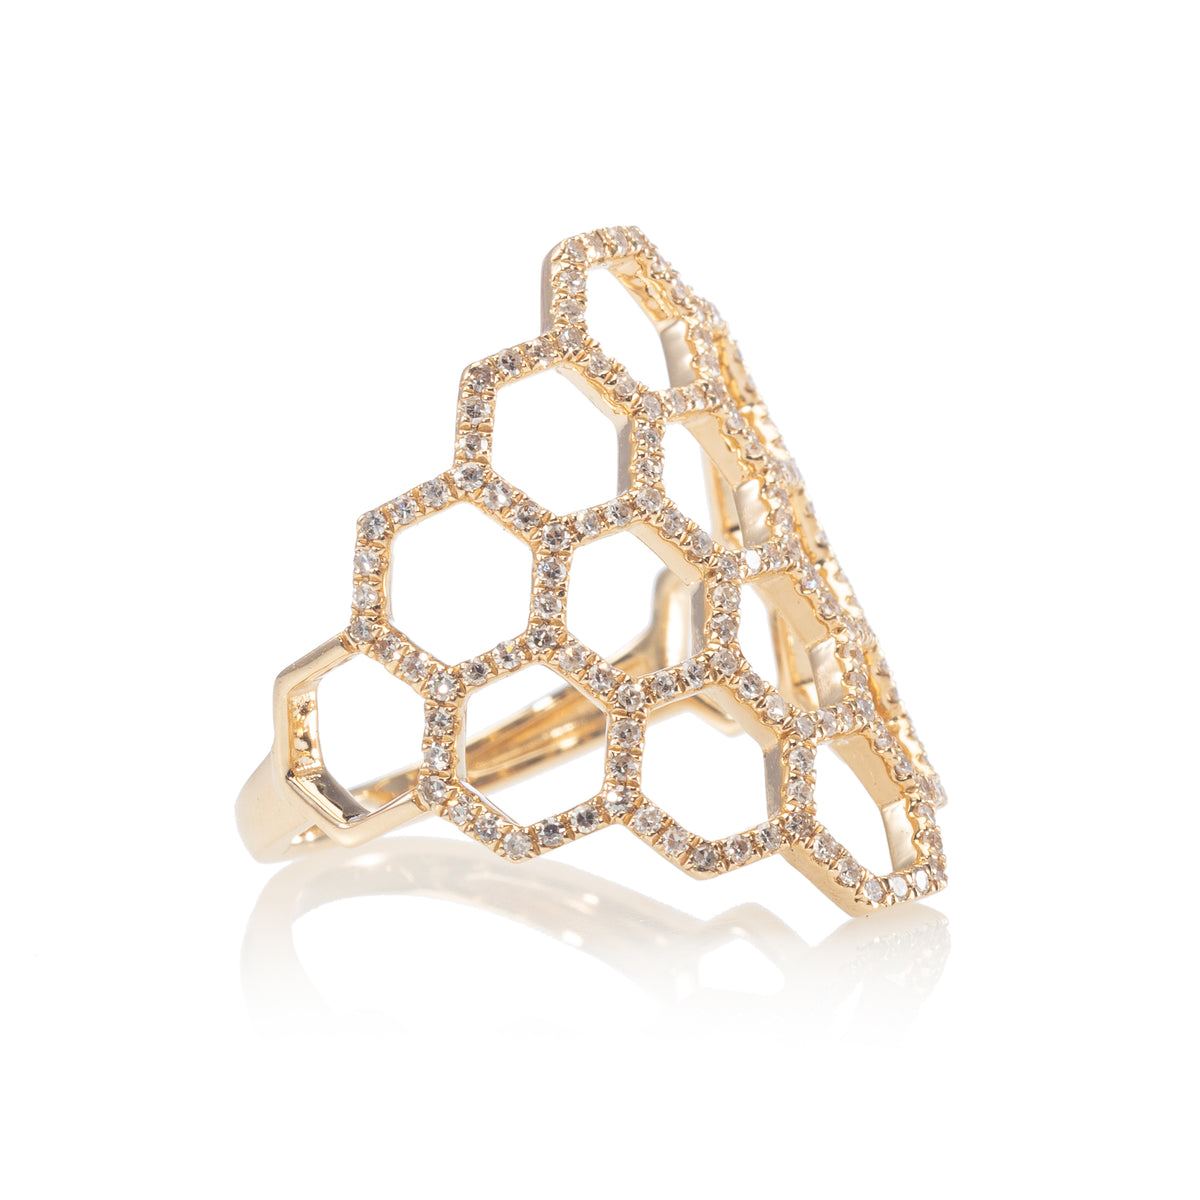 Honeycomb Ring